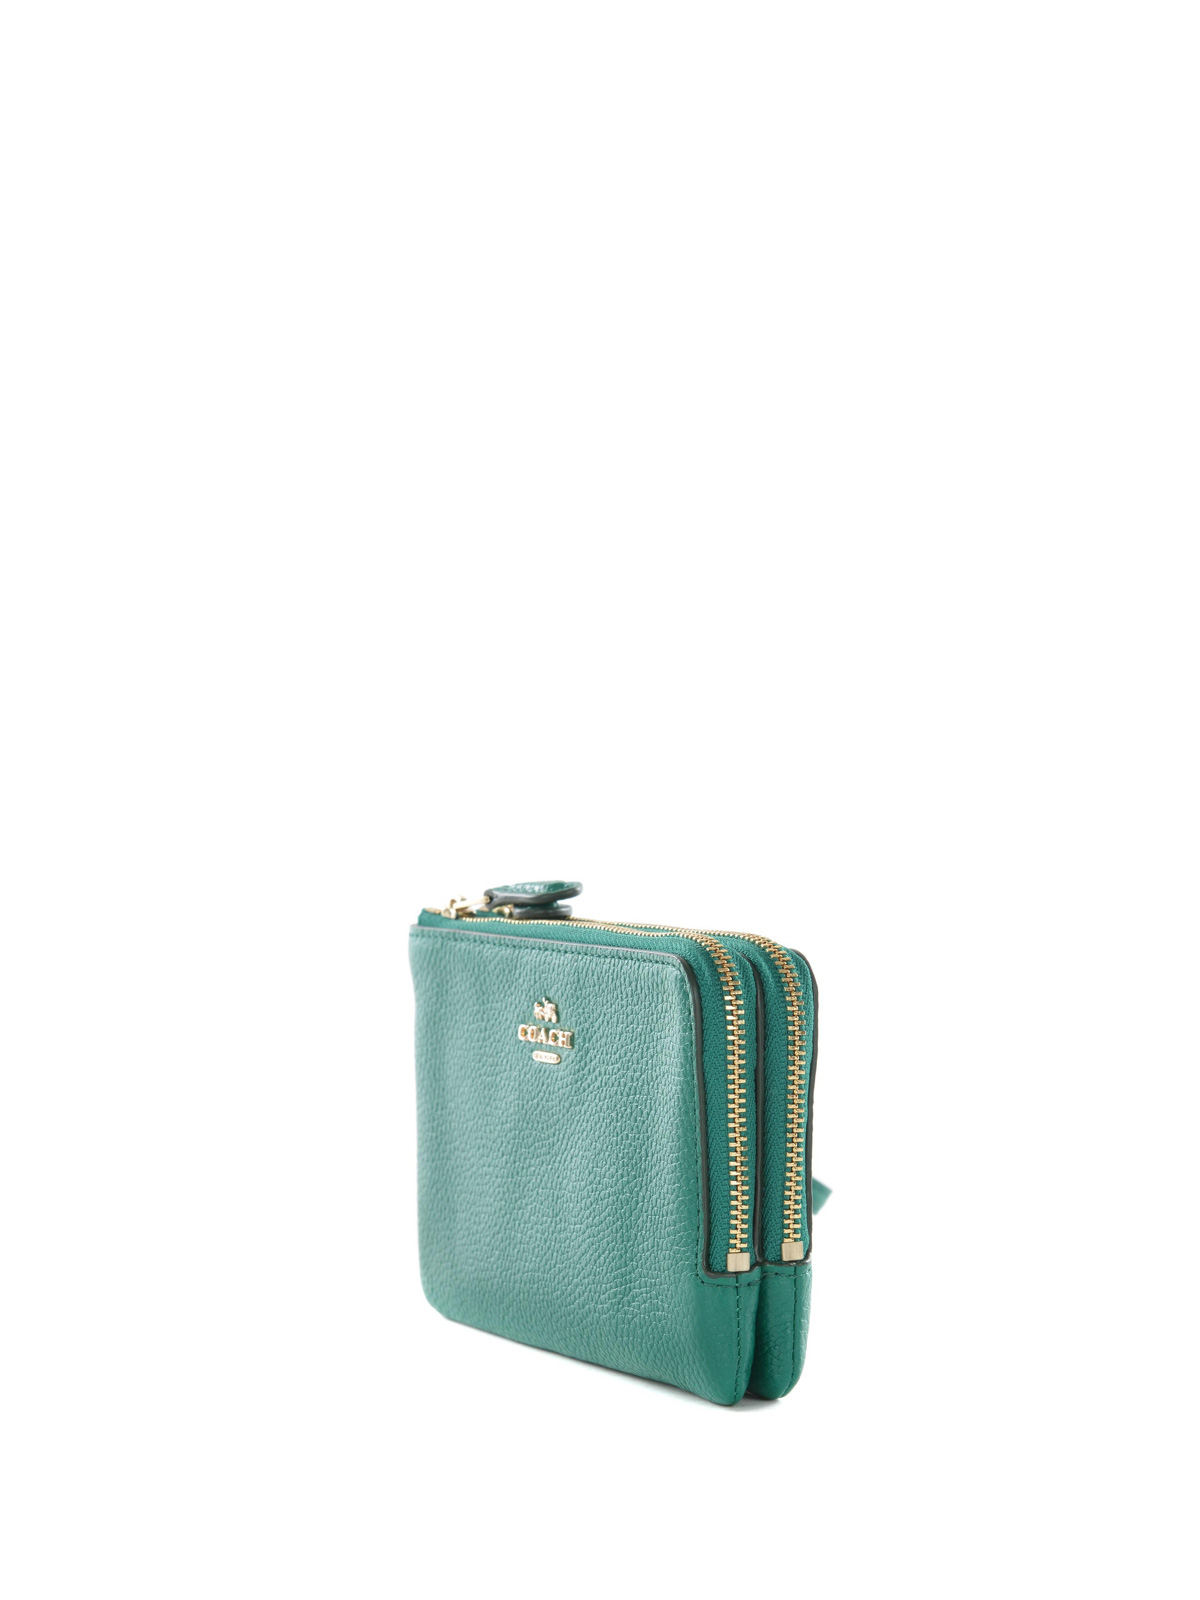 Double zip wristlet wallet by Coach - wallets & purses | Shop online at 0 - 54813 LI FOREST